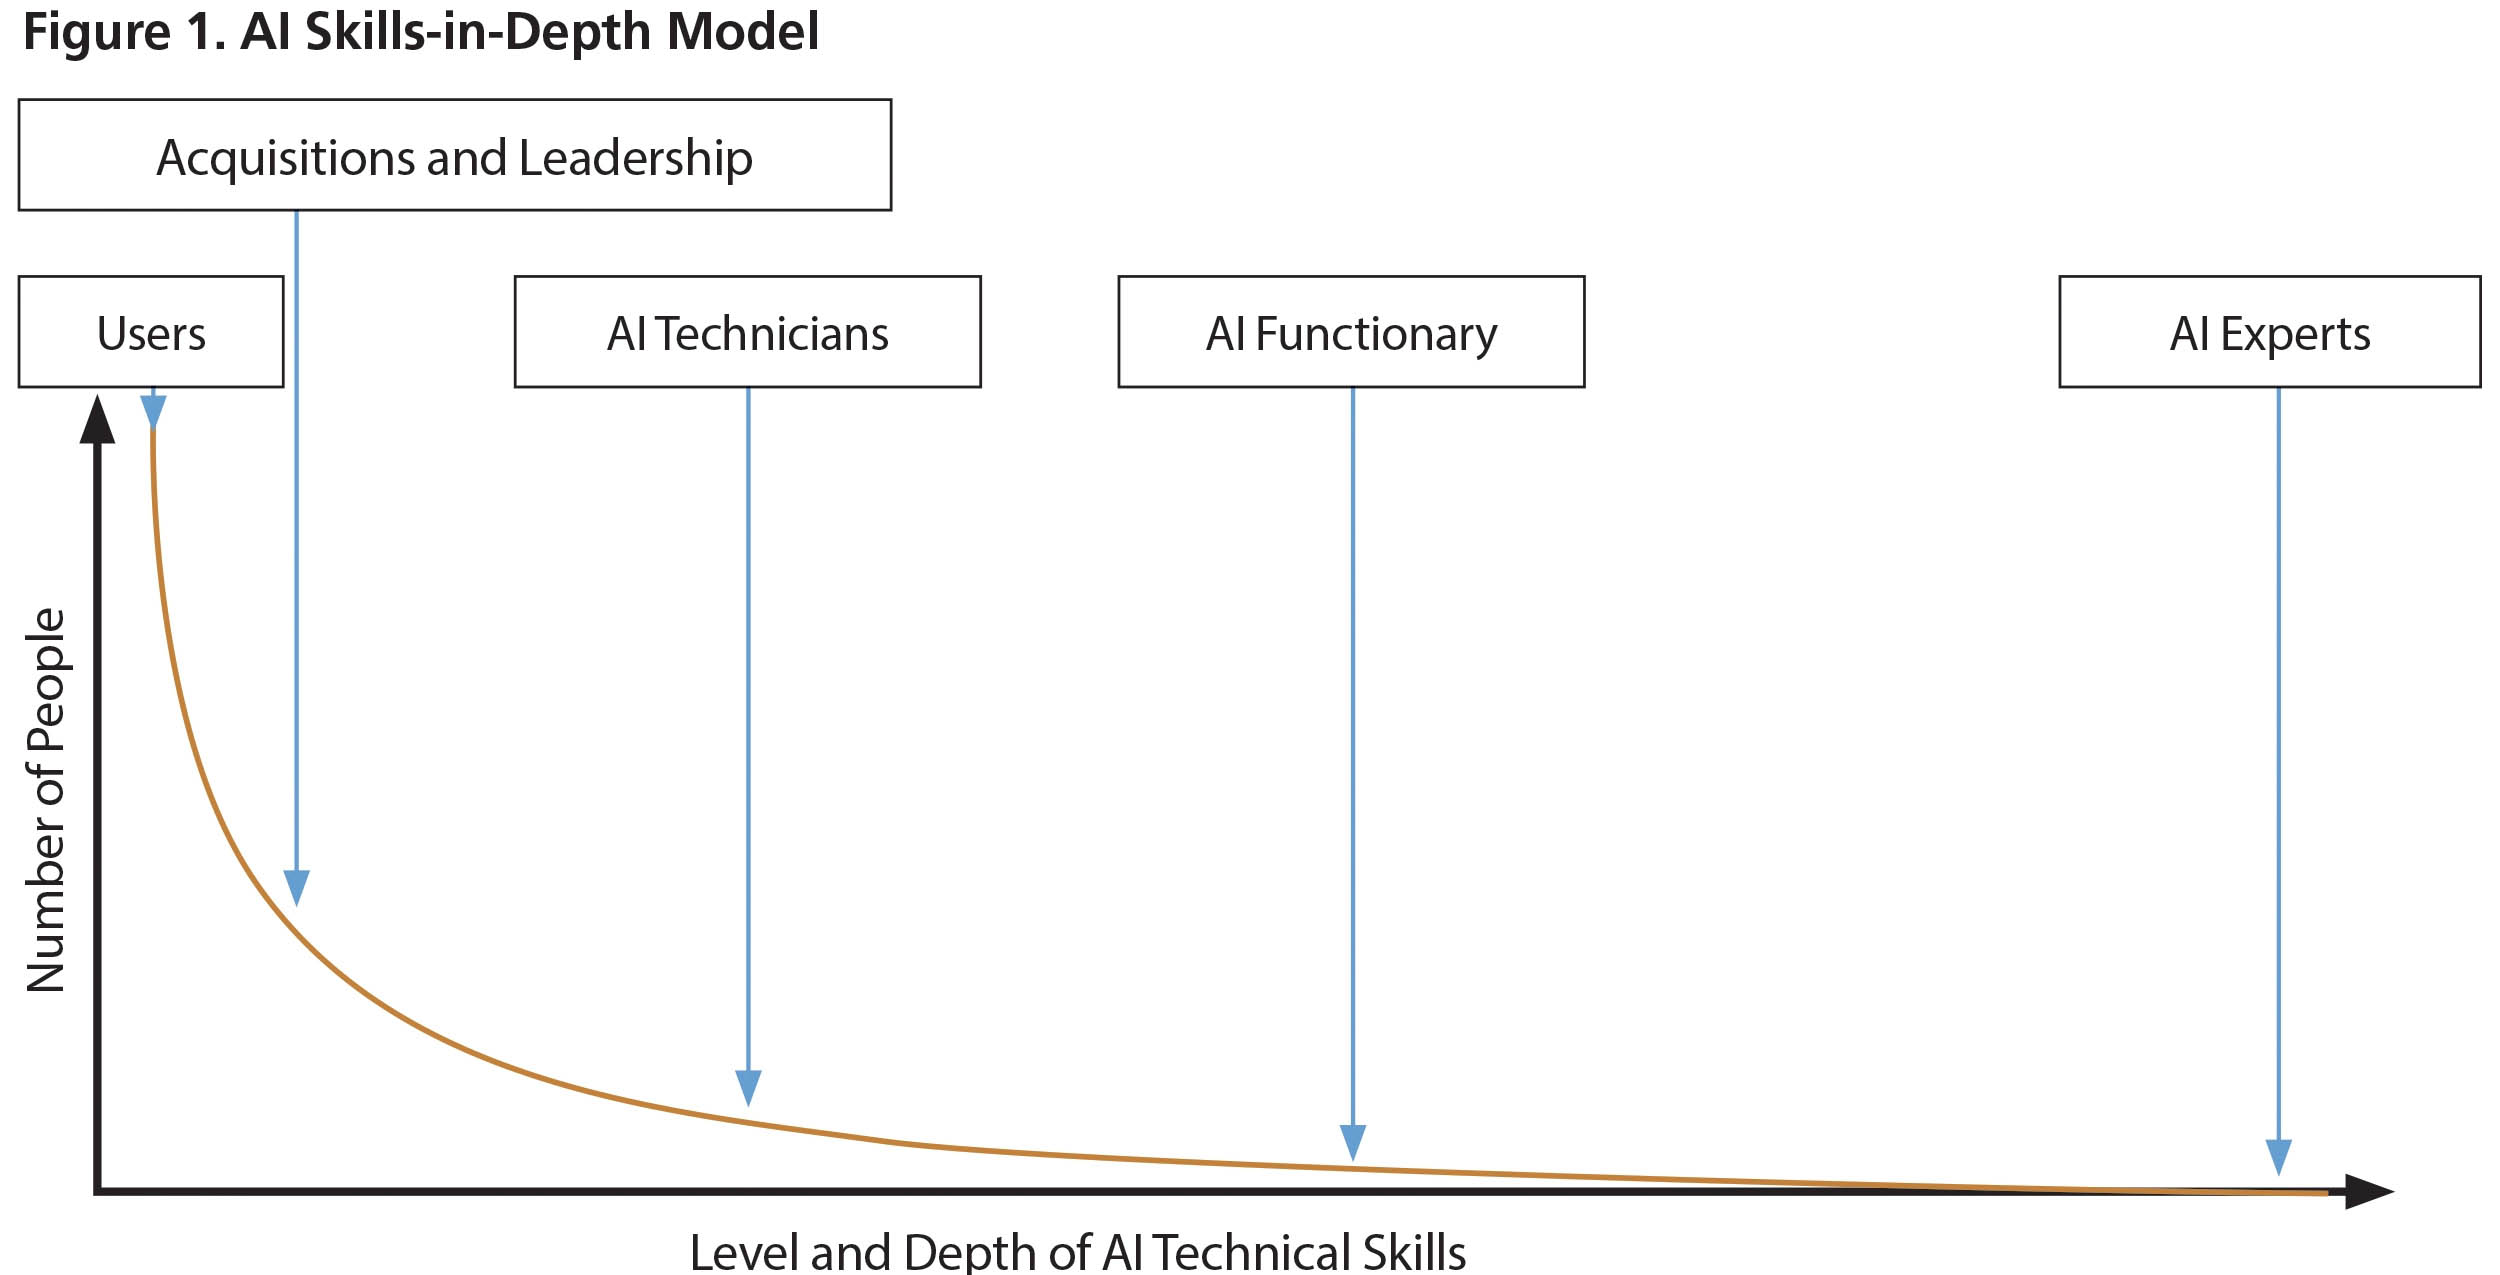 Figure 1. AI Skills-in-Depth Model